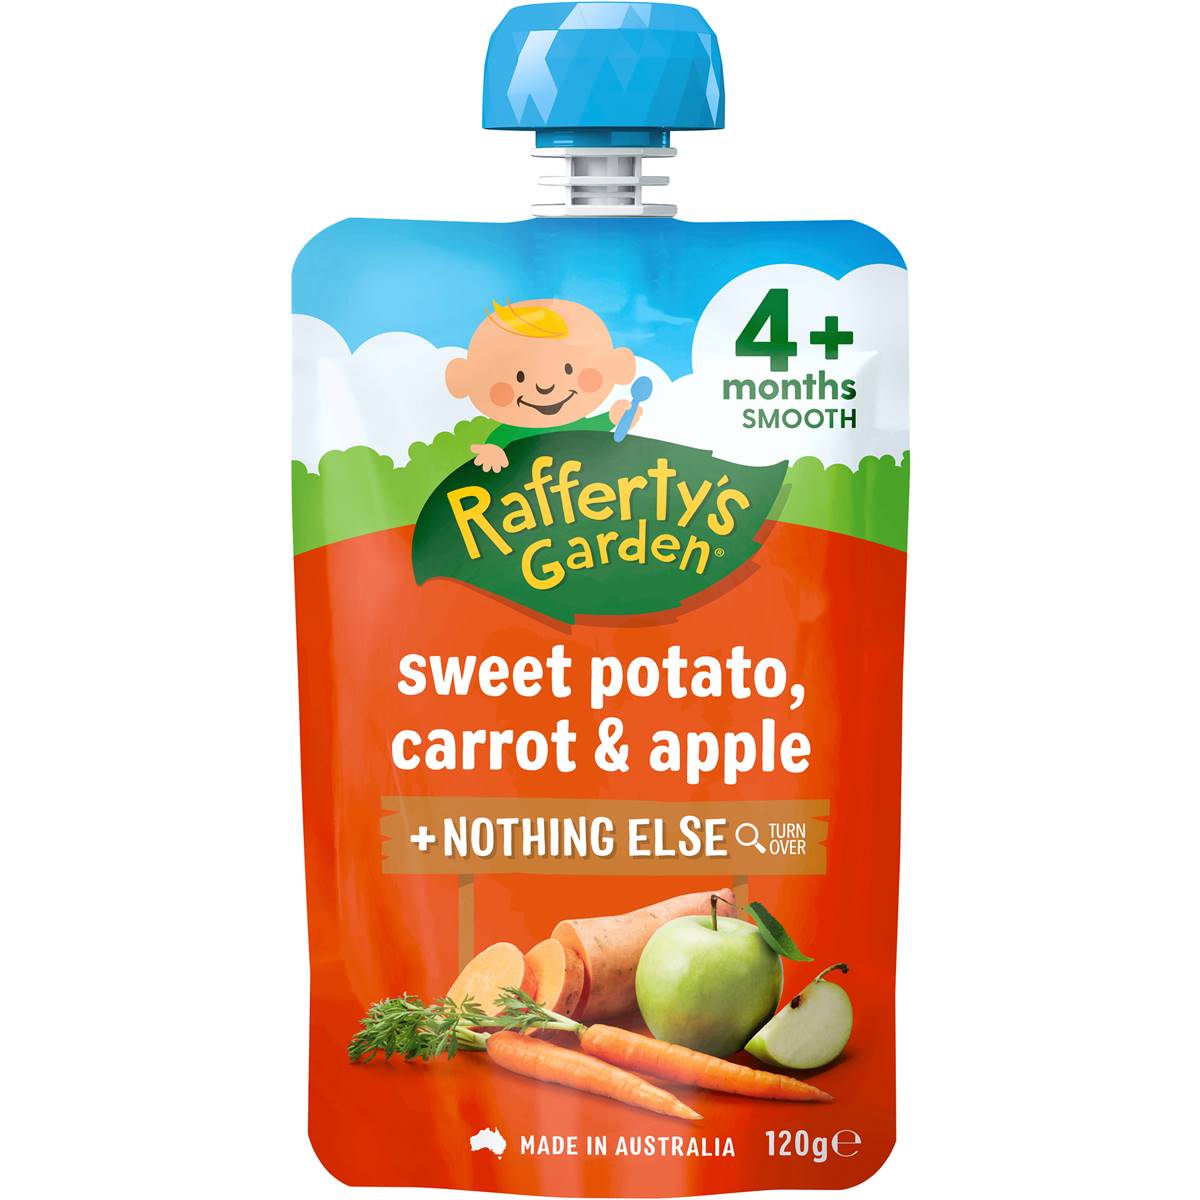 Raffertys Garden Sweet Potato Carrot & Apple 120g